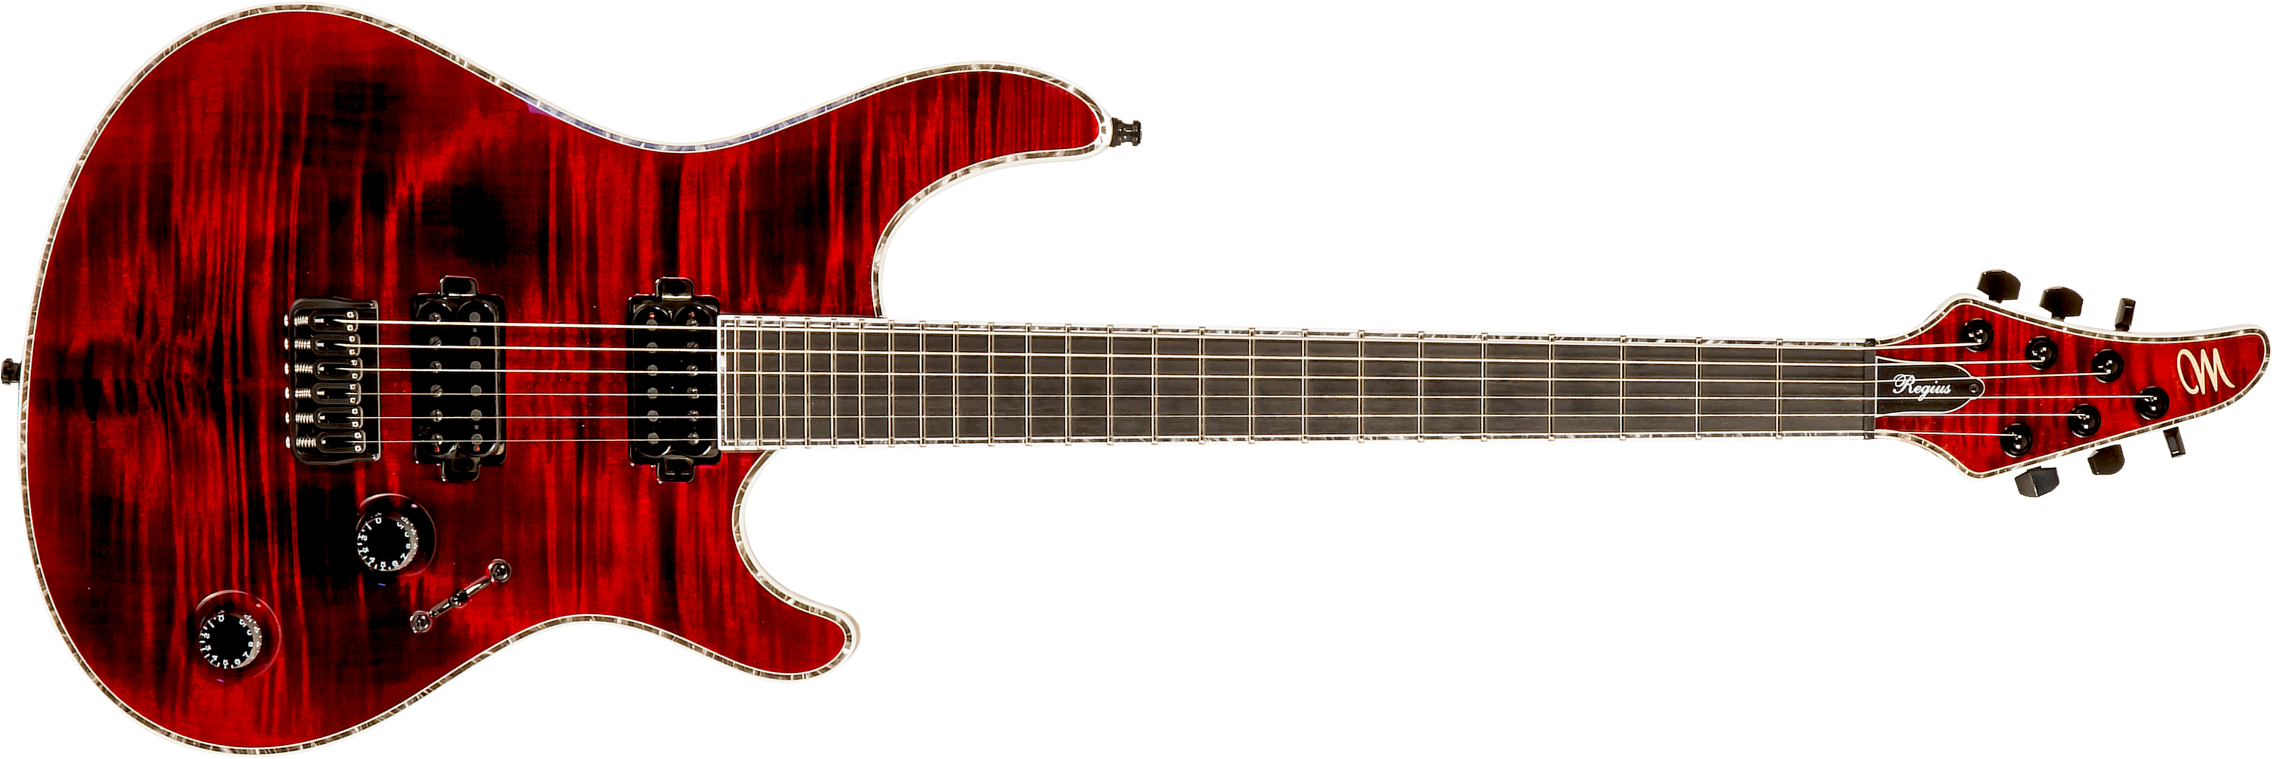 Mayones Guitars Regius 6 Ash 2h Tko Ht Eb #rf2203440 - Dirty Red Burst - Str shape electric guitar - Main picture